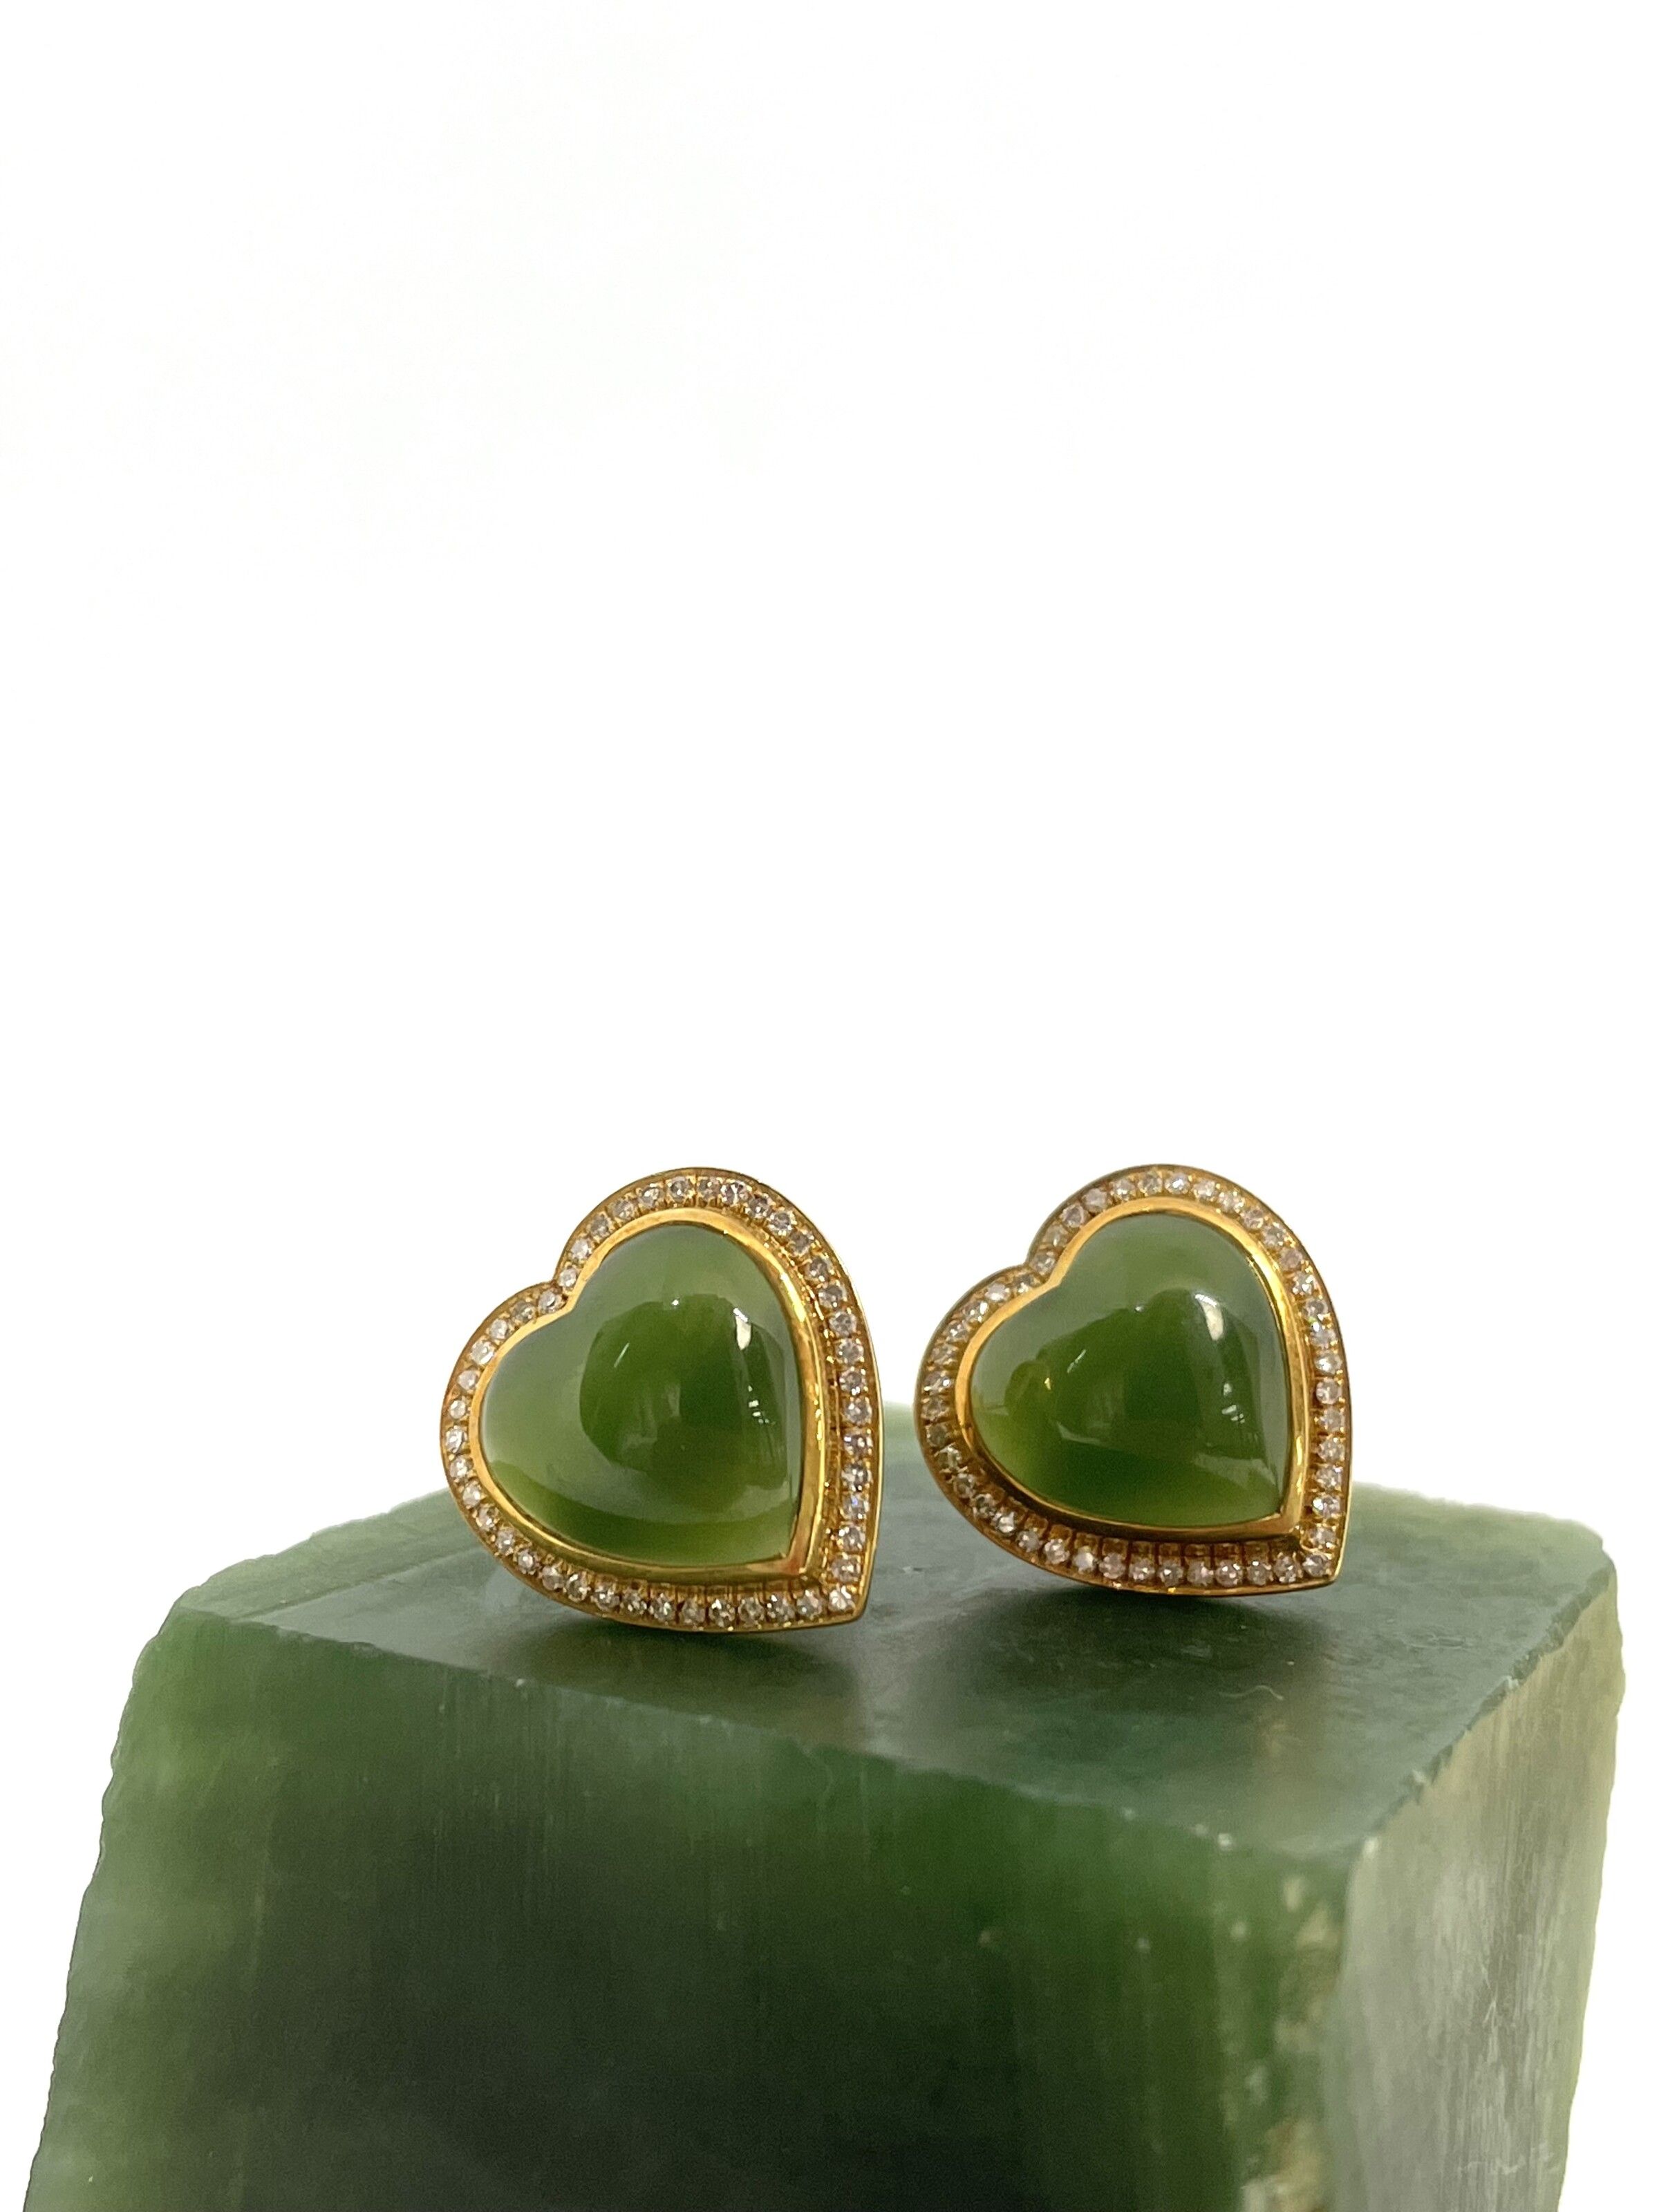 New Zealand Jade (Pounamu) 18K Gold Heart Earrings